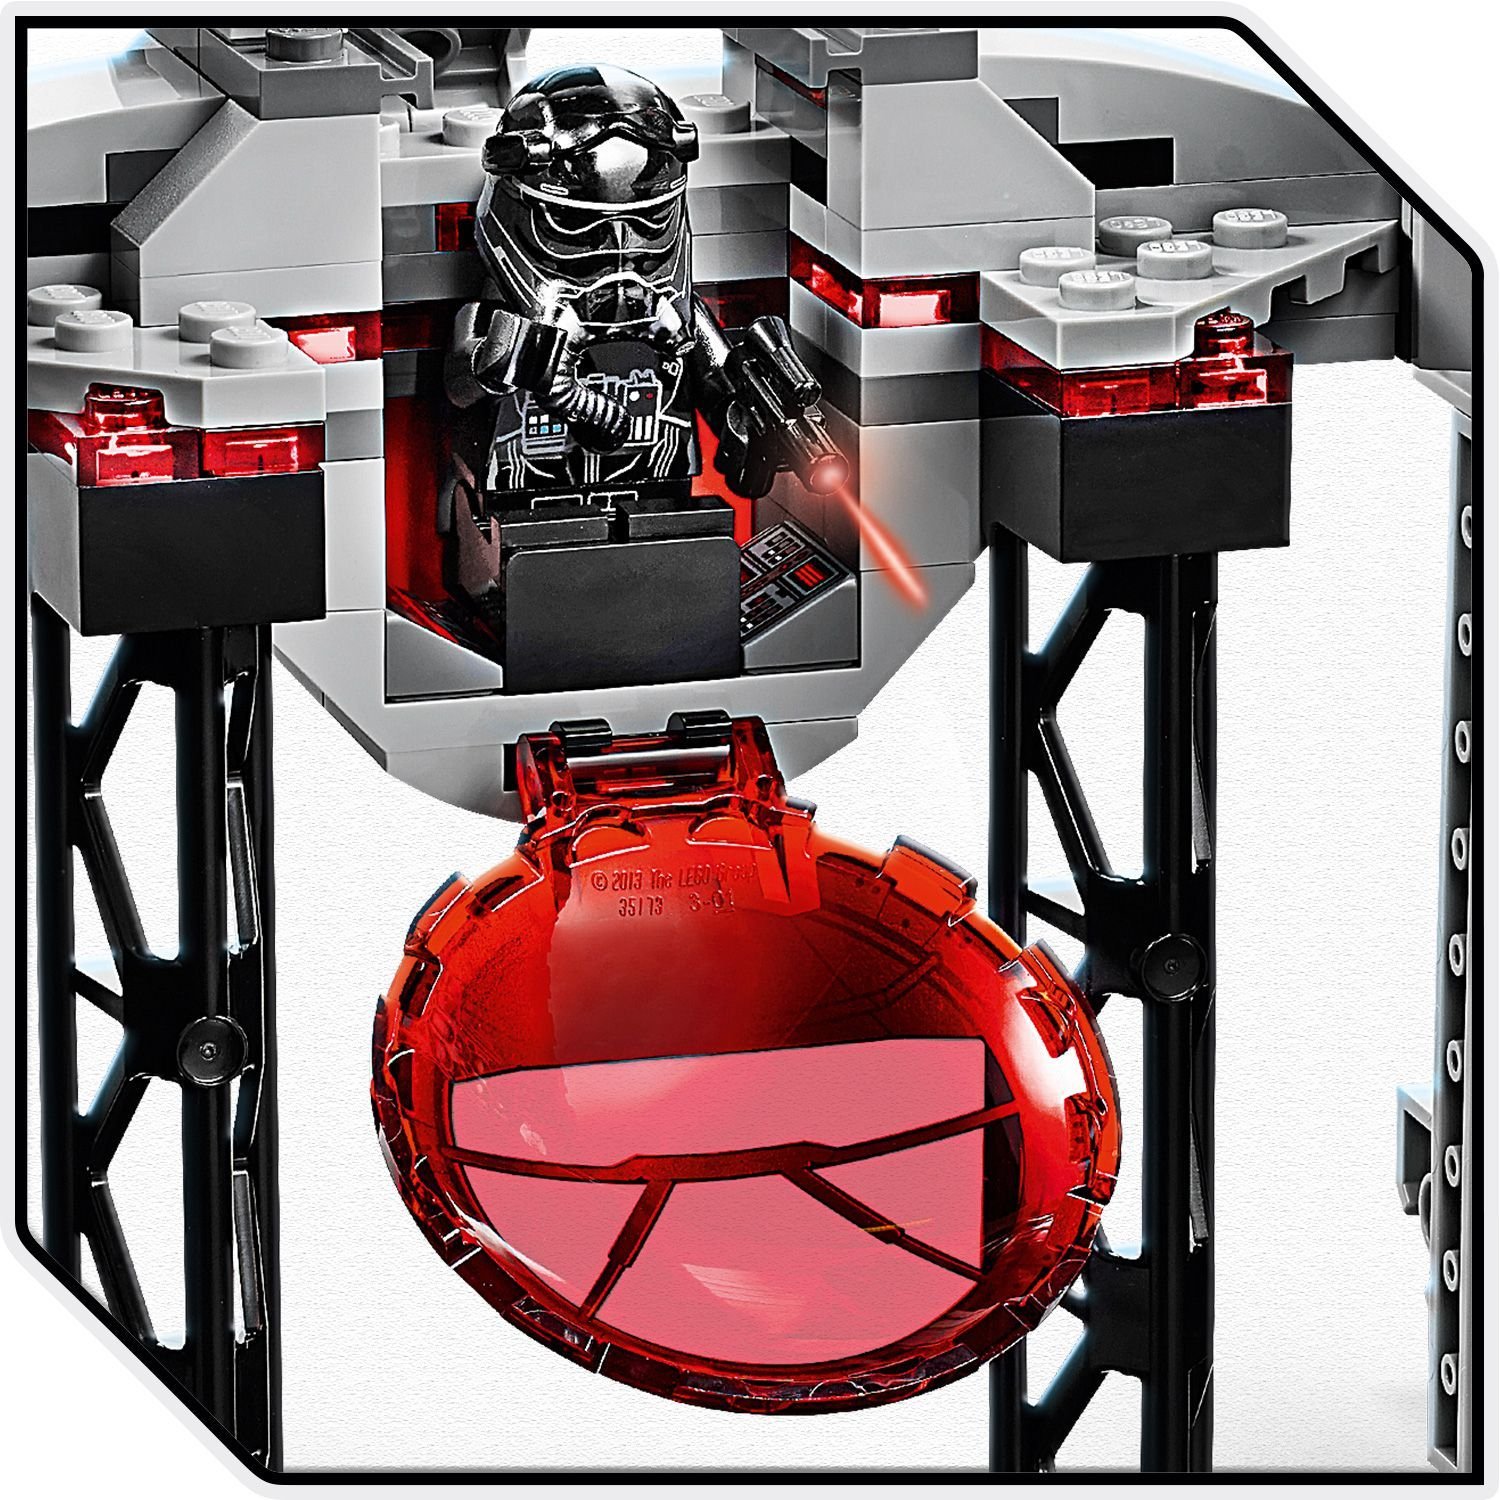 Lego Star Wars 75272 Истребитель СИД ситхов